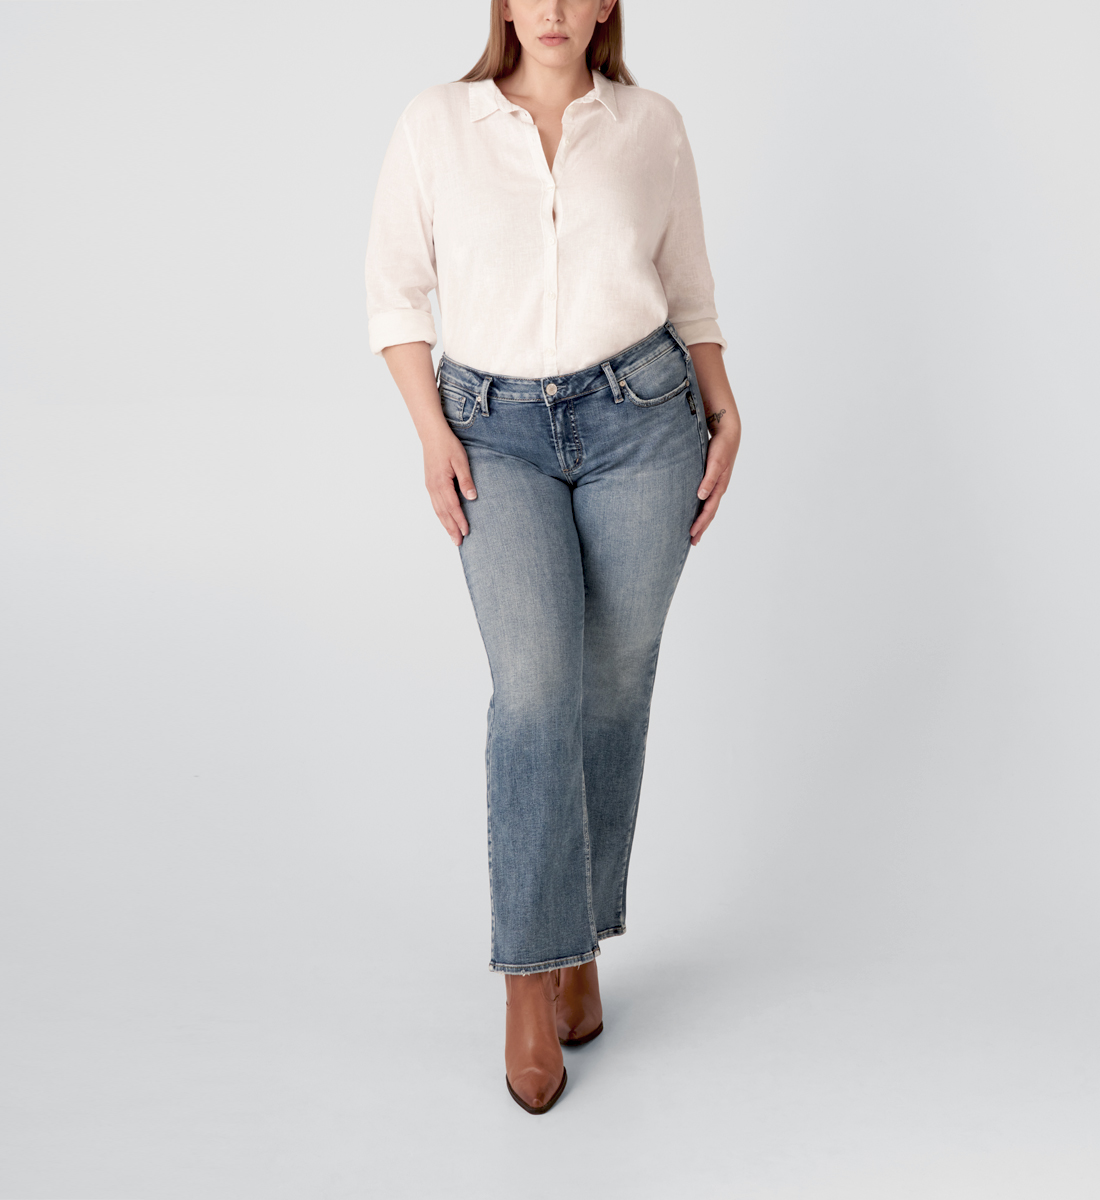 Womens Plus Size Elyse Curvy Mid Rise Slim Fit Bootcut Jean Dark Indigo Wash Silver Jeans Co 20W X 35L